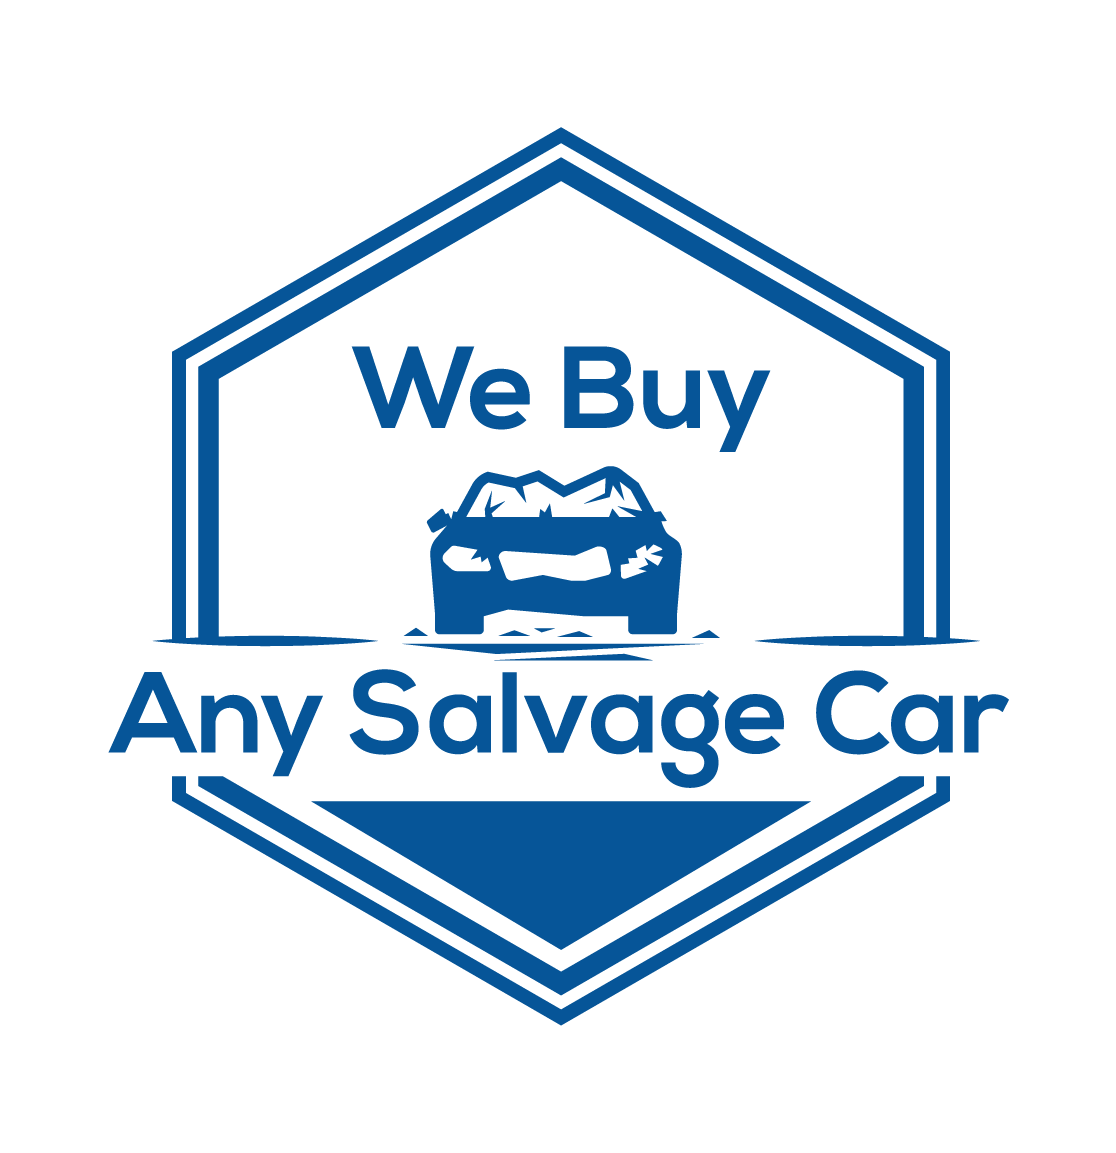 We buy any salvage car logo